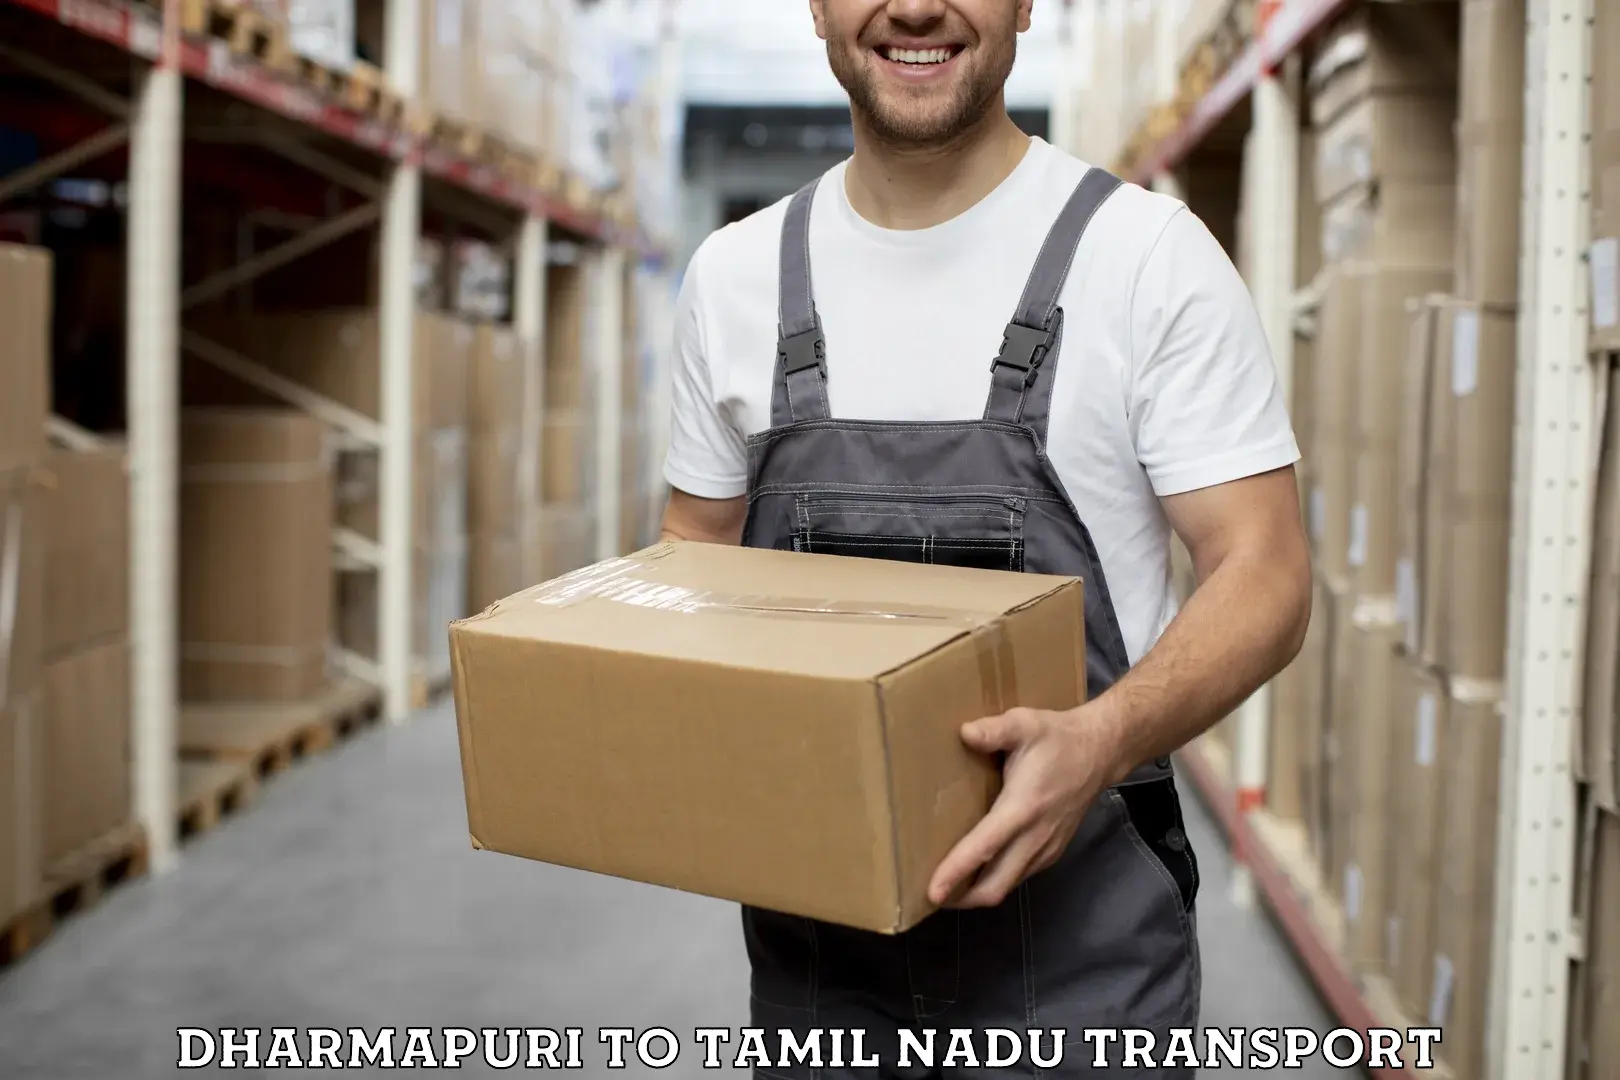 Delivery service Dharmapuri to Tambaram